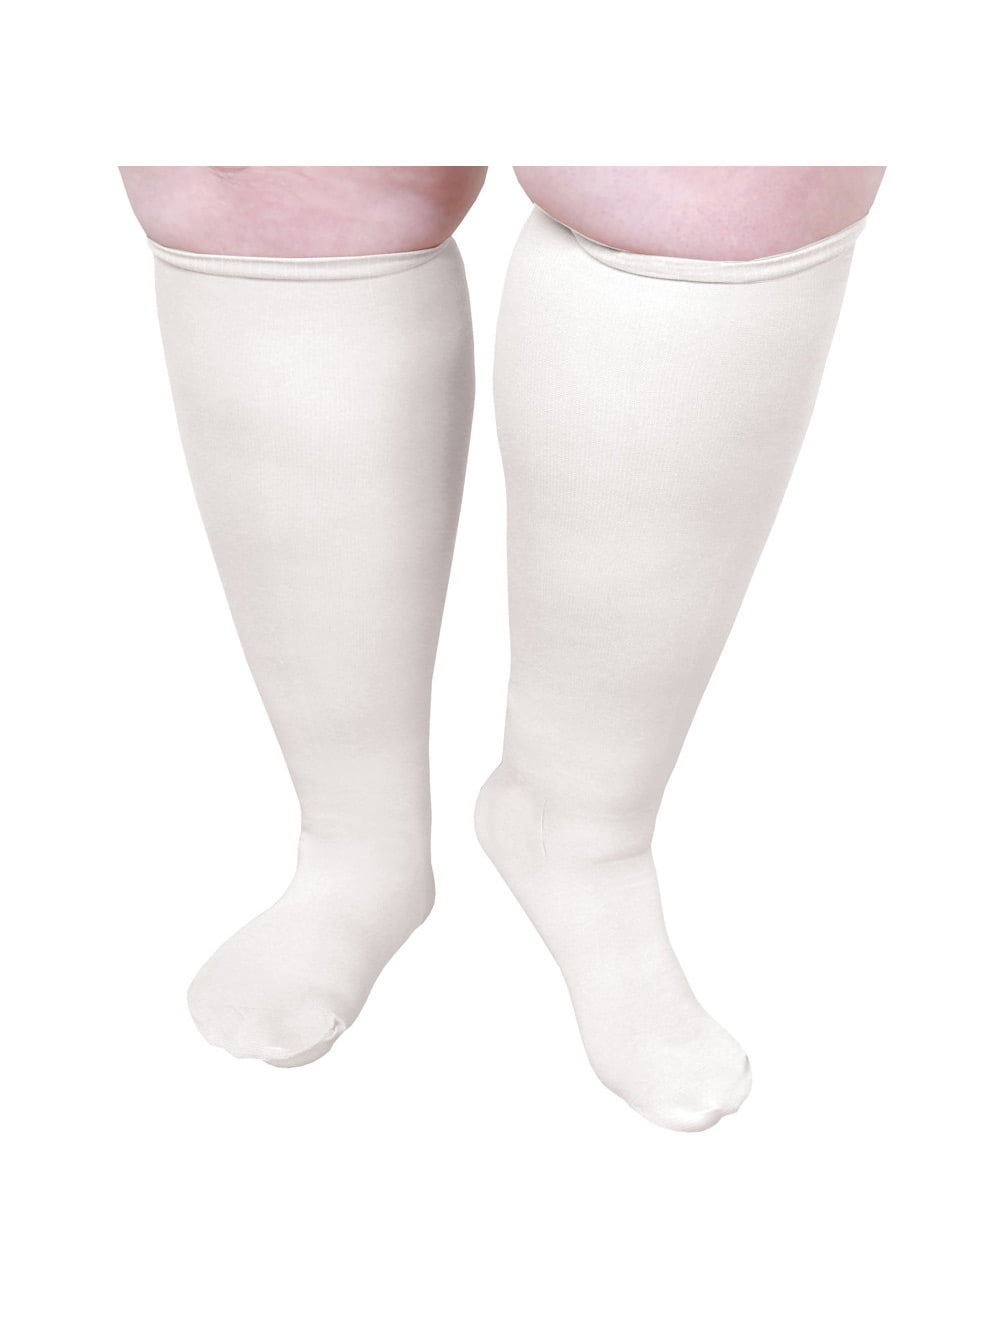 Buy > wide calf knee socks > in stock